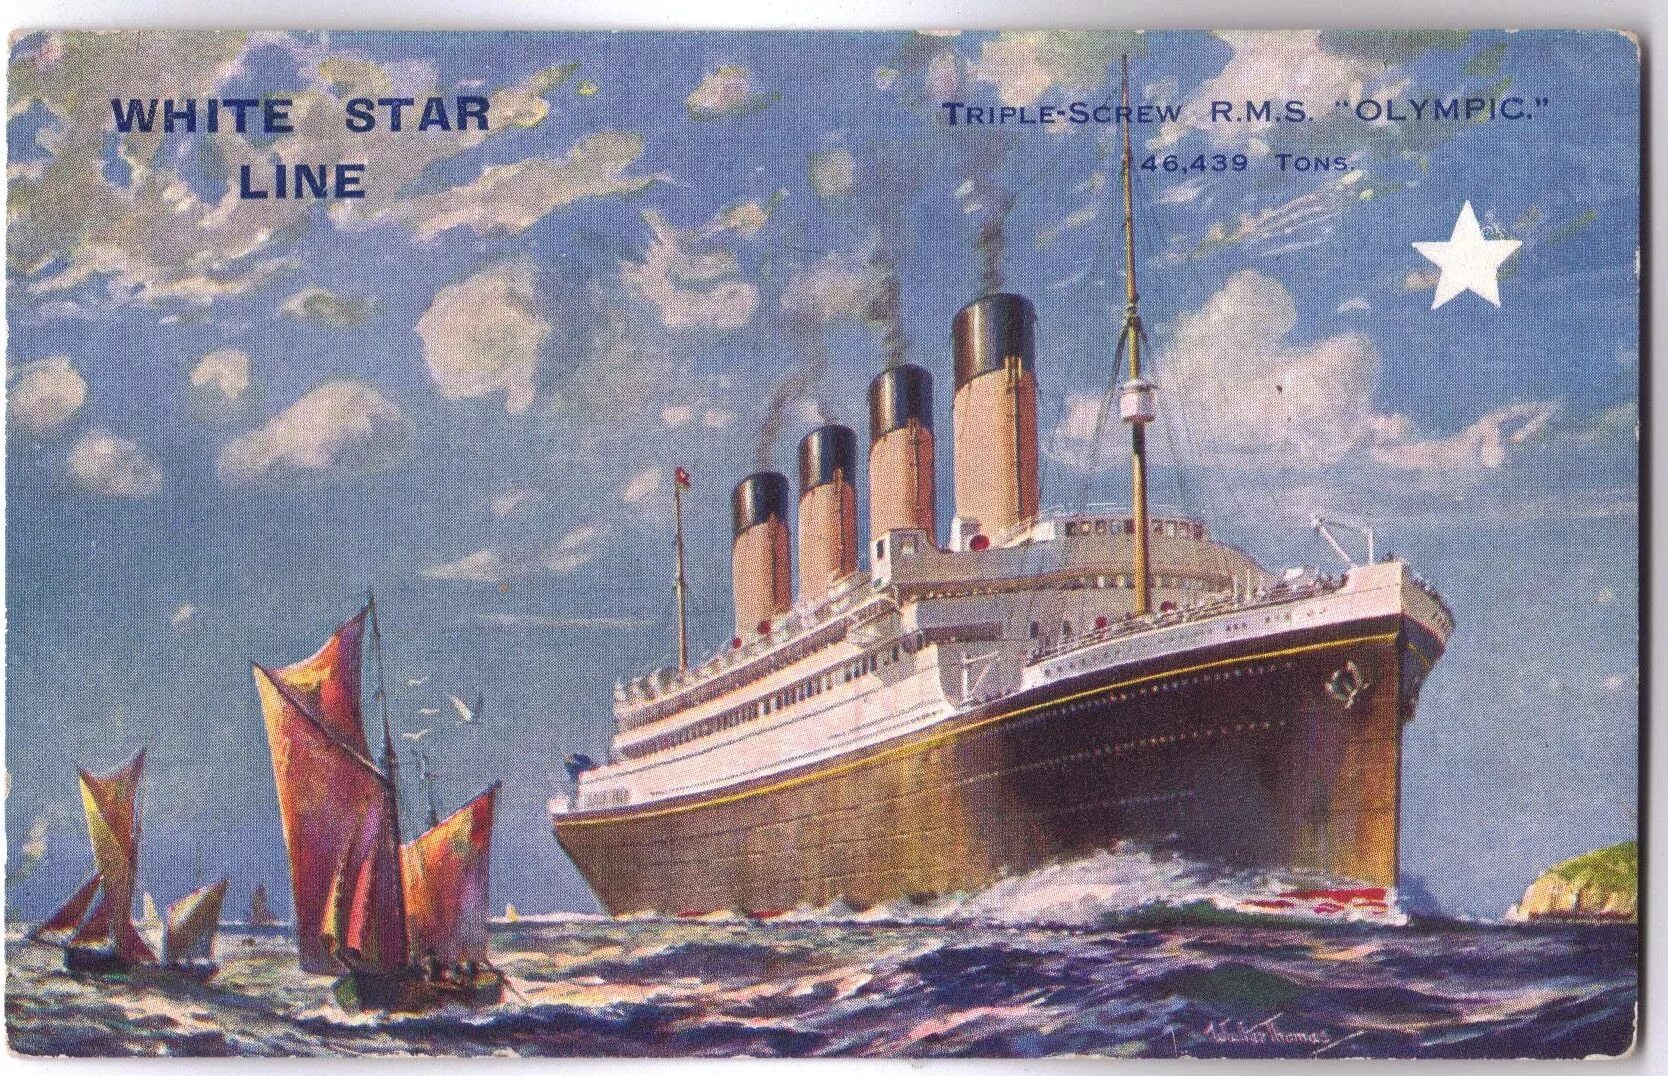 White Star line Титаник. Корабль Британик компании Уайт Стар лайн. Пароходы Уайт Стар лайн. Корабли компании White Star line. Лайнер времен ноя